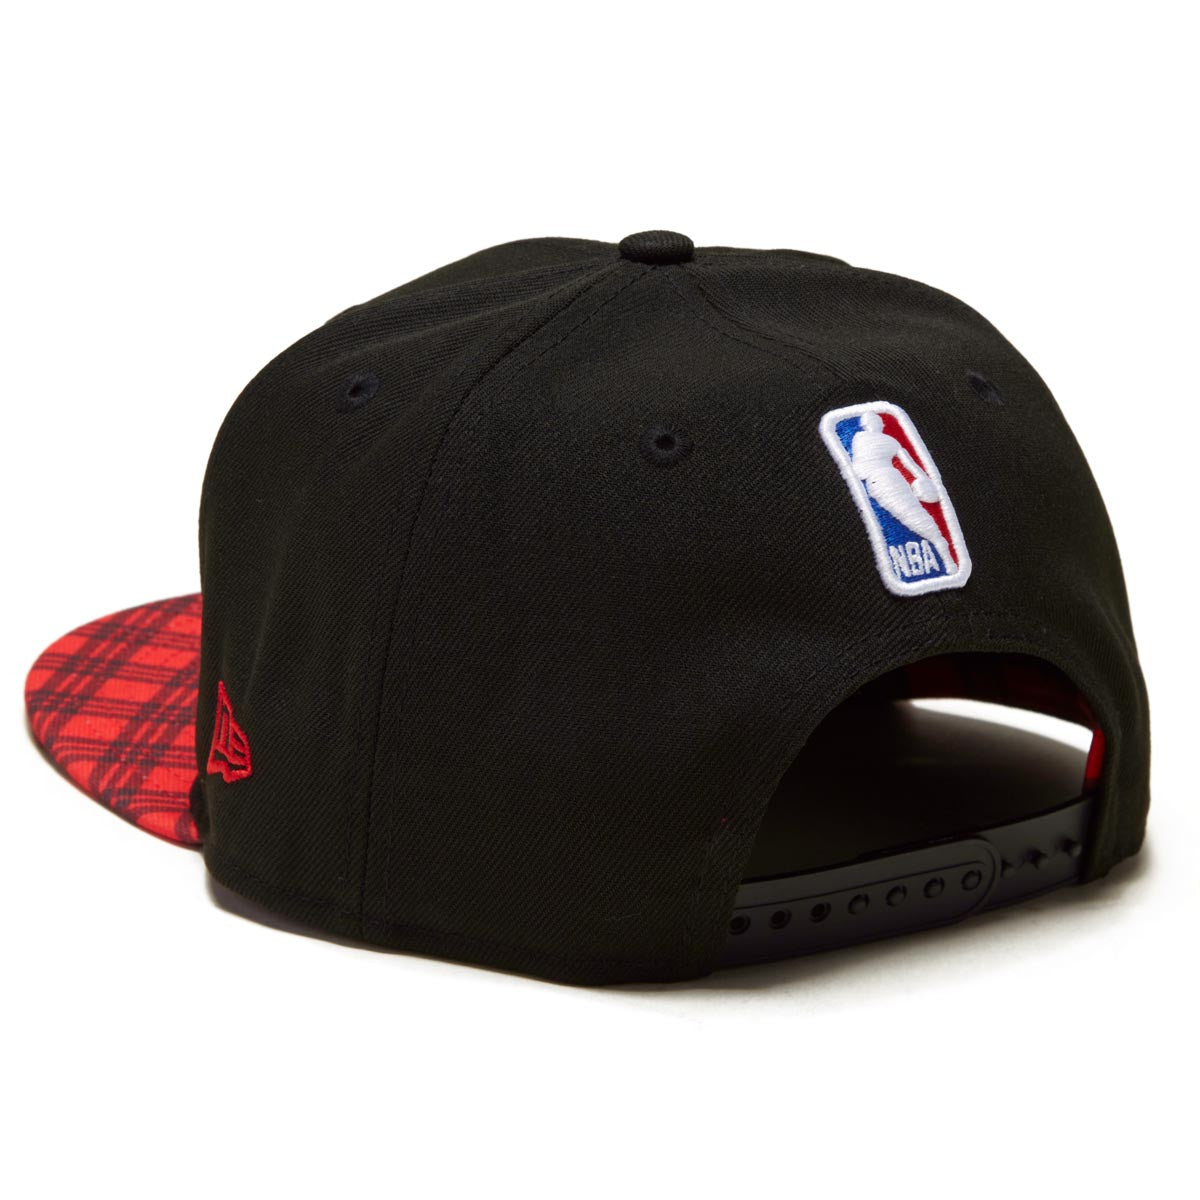 New Era x NBA 950 23 Portland Blazers Hat - Black/Red image 2